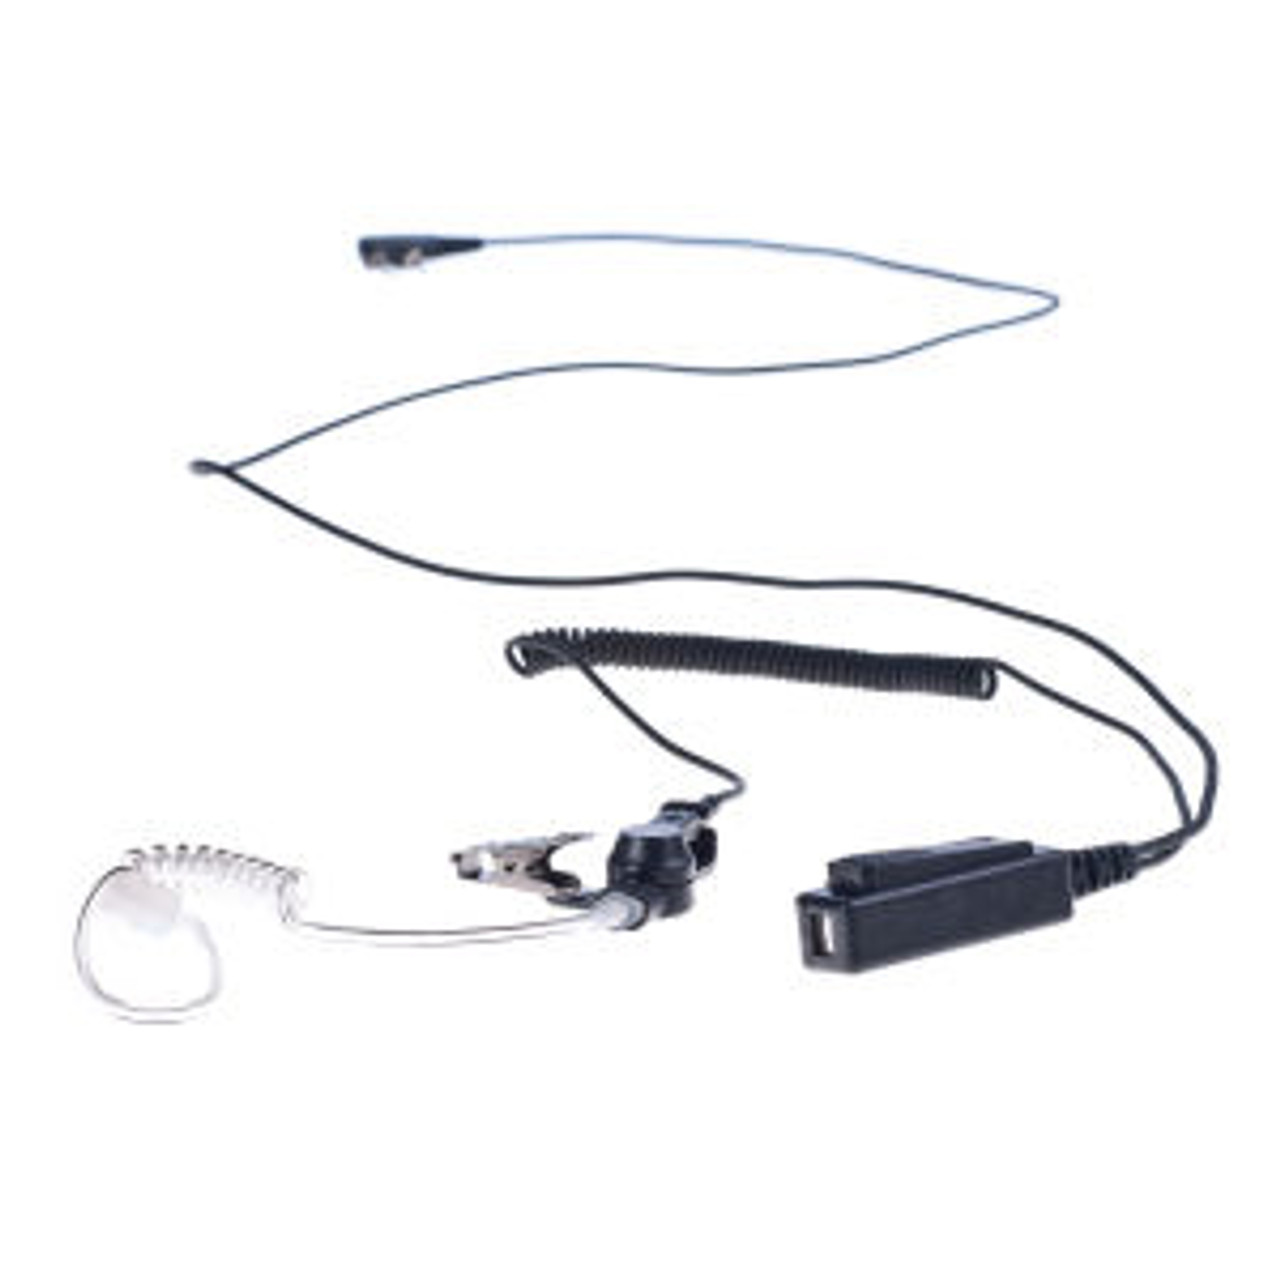 Motorola ASTRO XTS3000 1-Wire Surveillance Kit